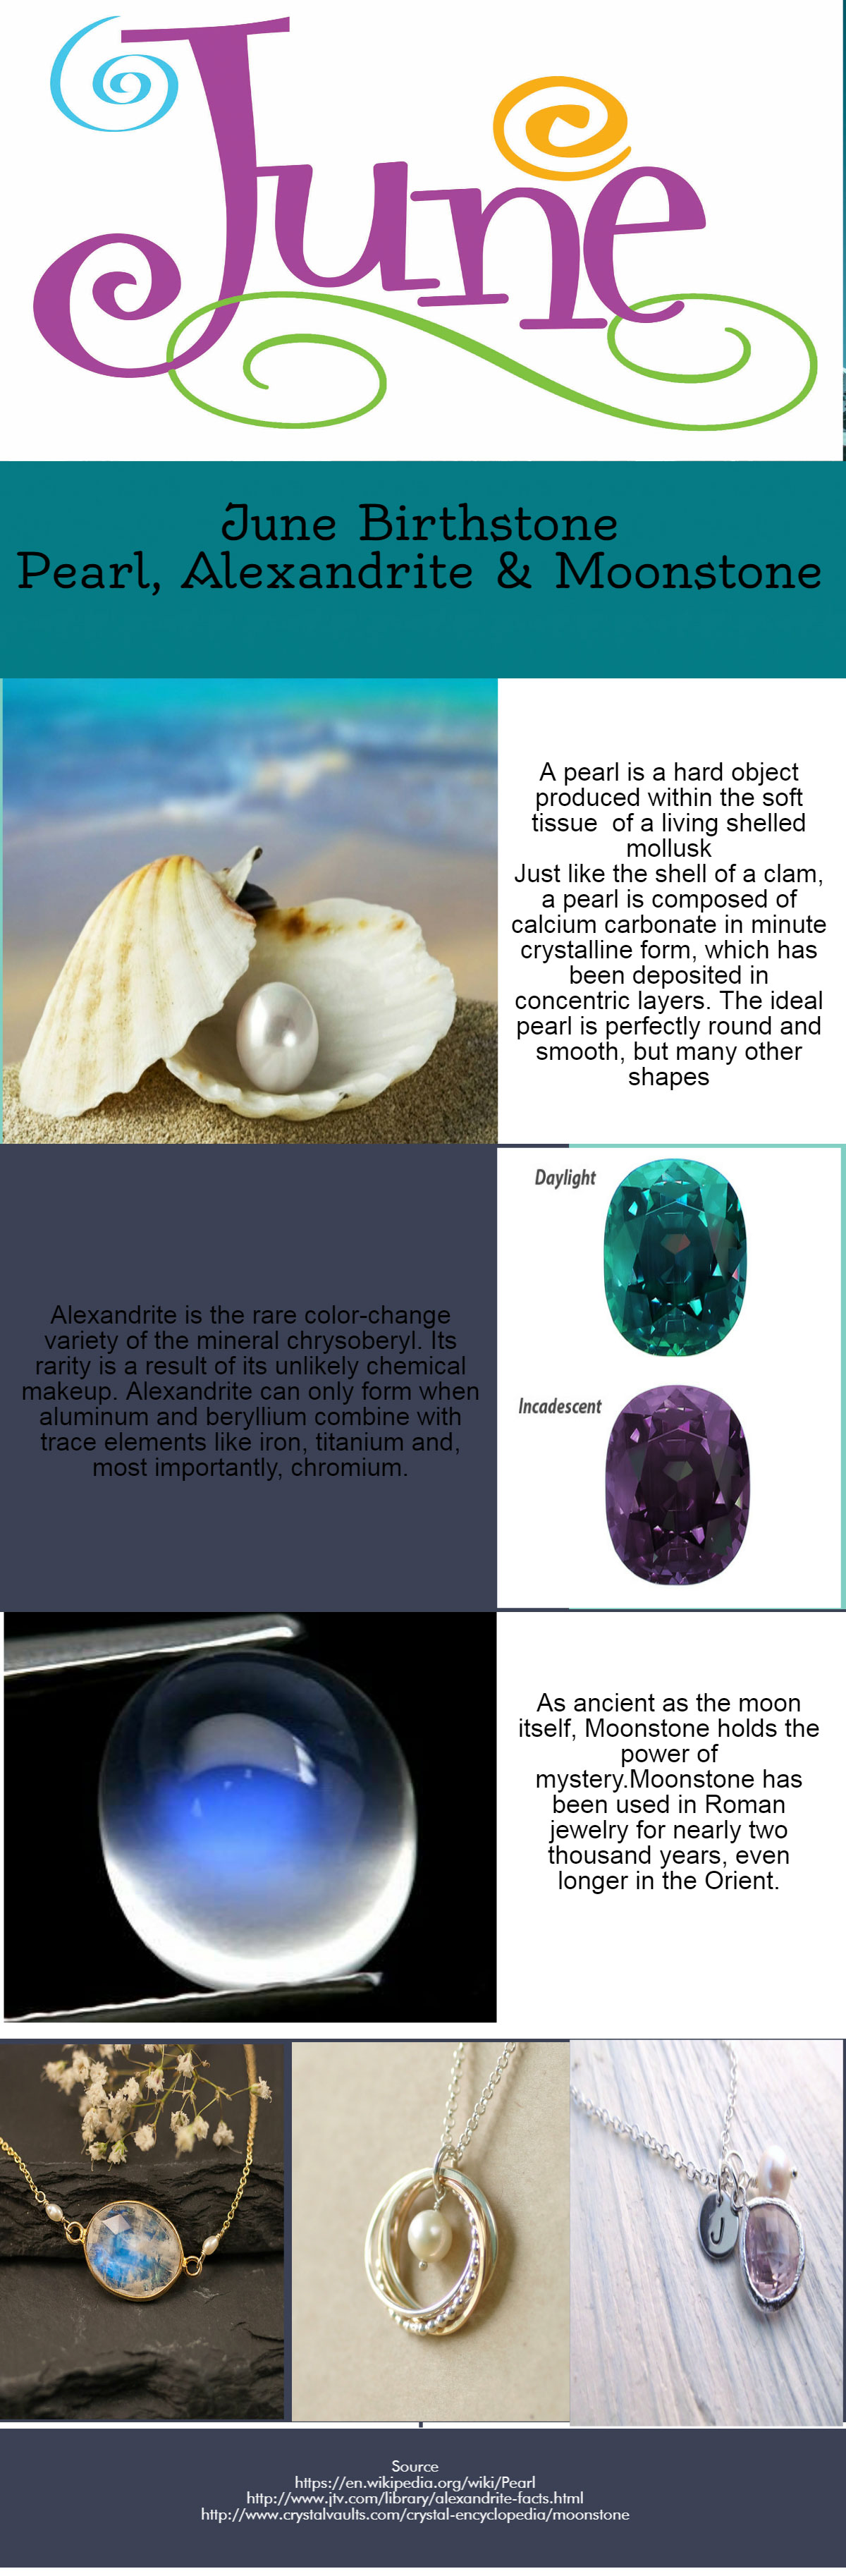 june-birthstones-pearl-alexandrite-and-moonstone